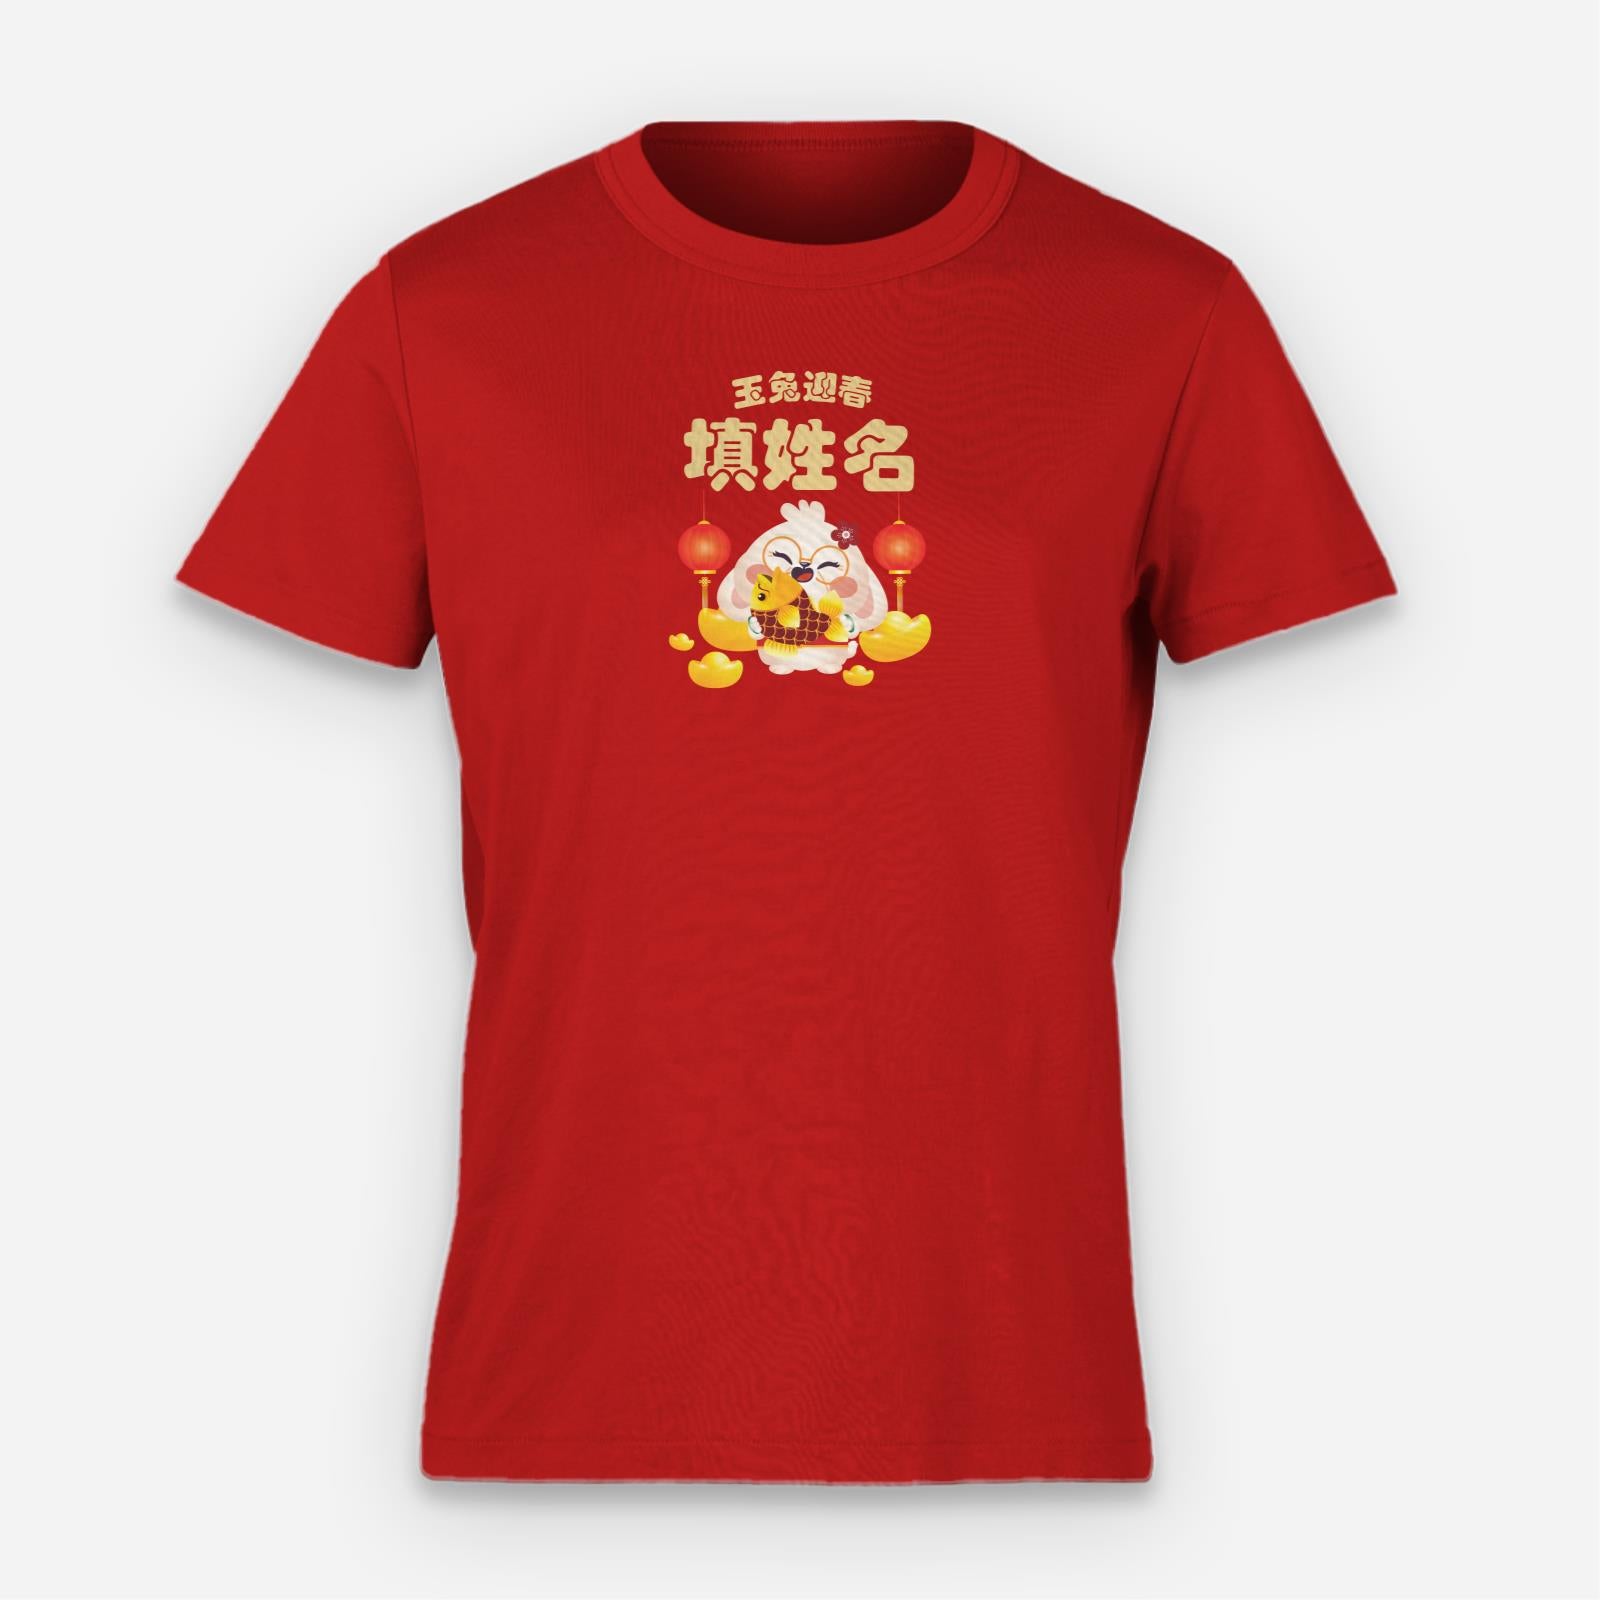 Cny Rabbit Family - Grandma Rabbit Slim Fit Women Tee Shirt with Chinese Personalization